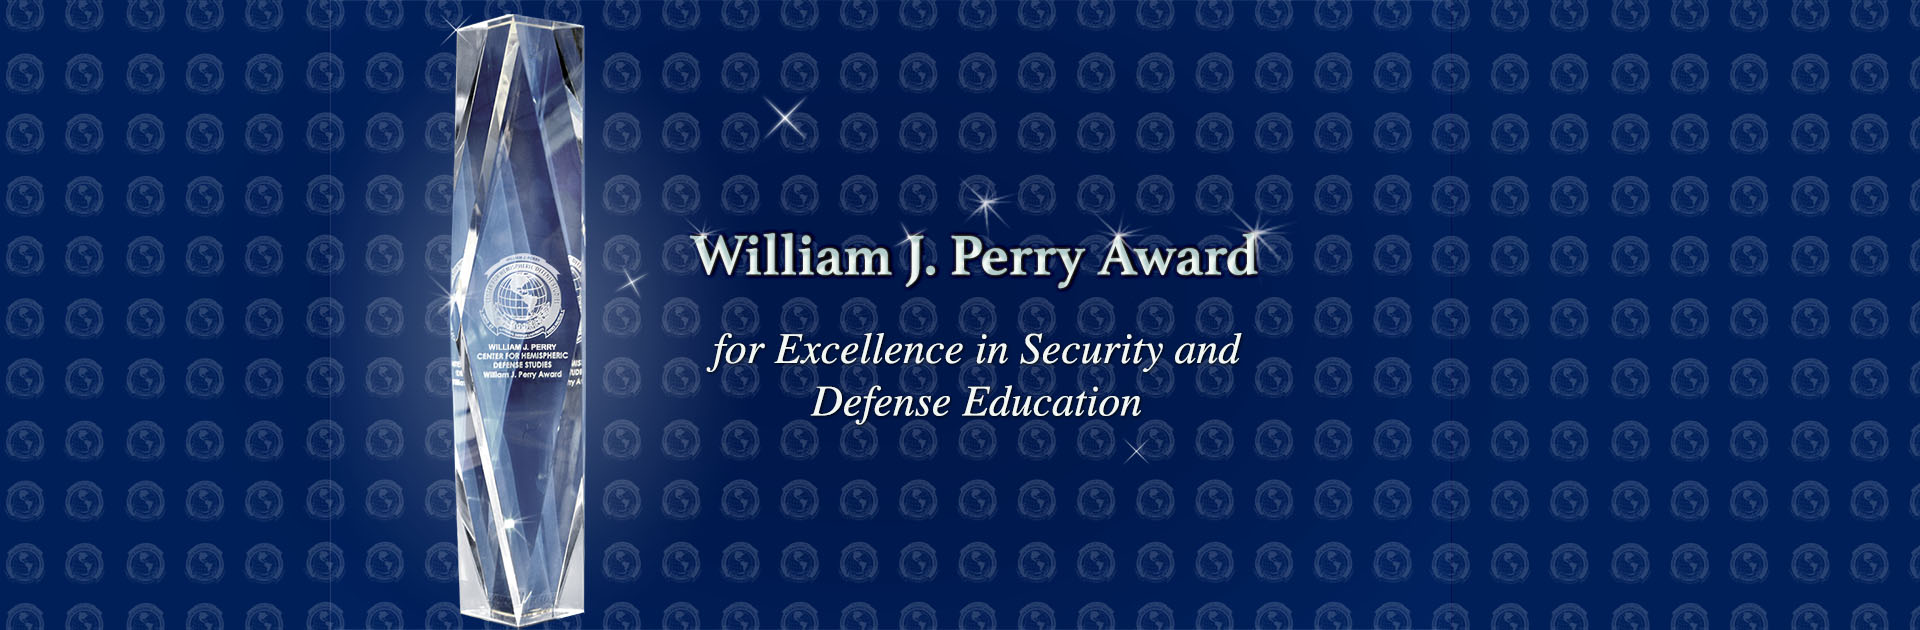 William J. Perry Award